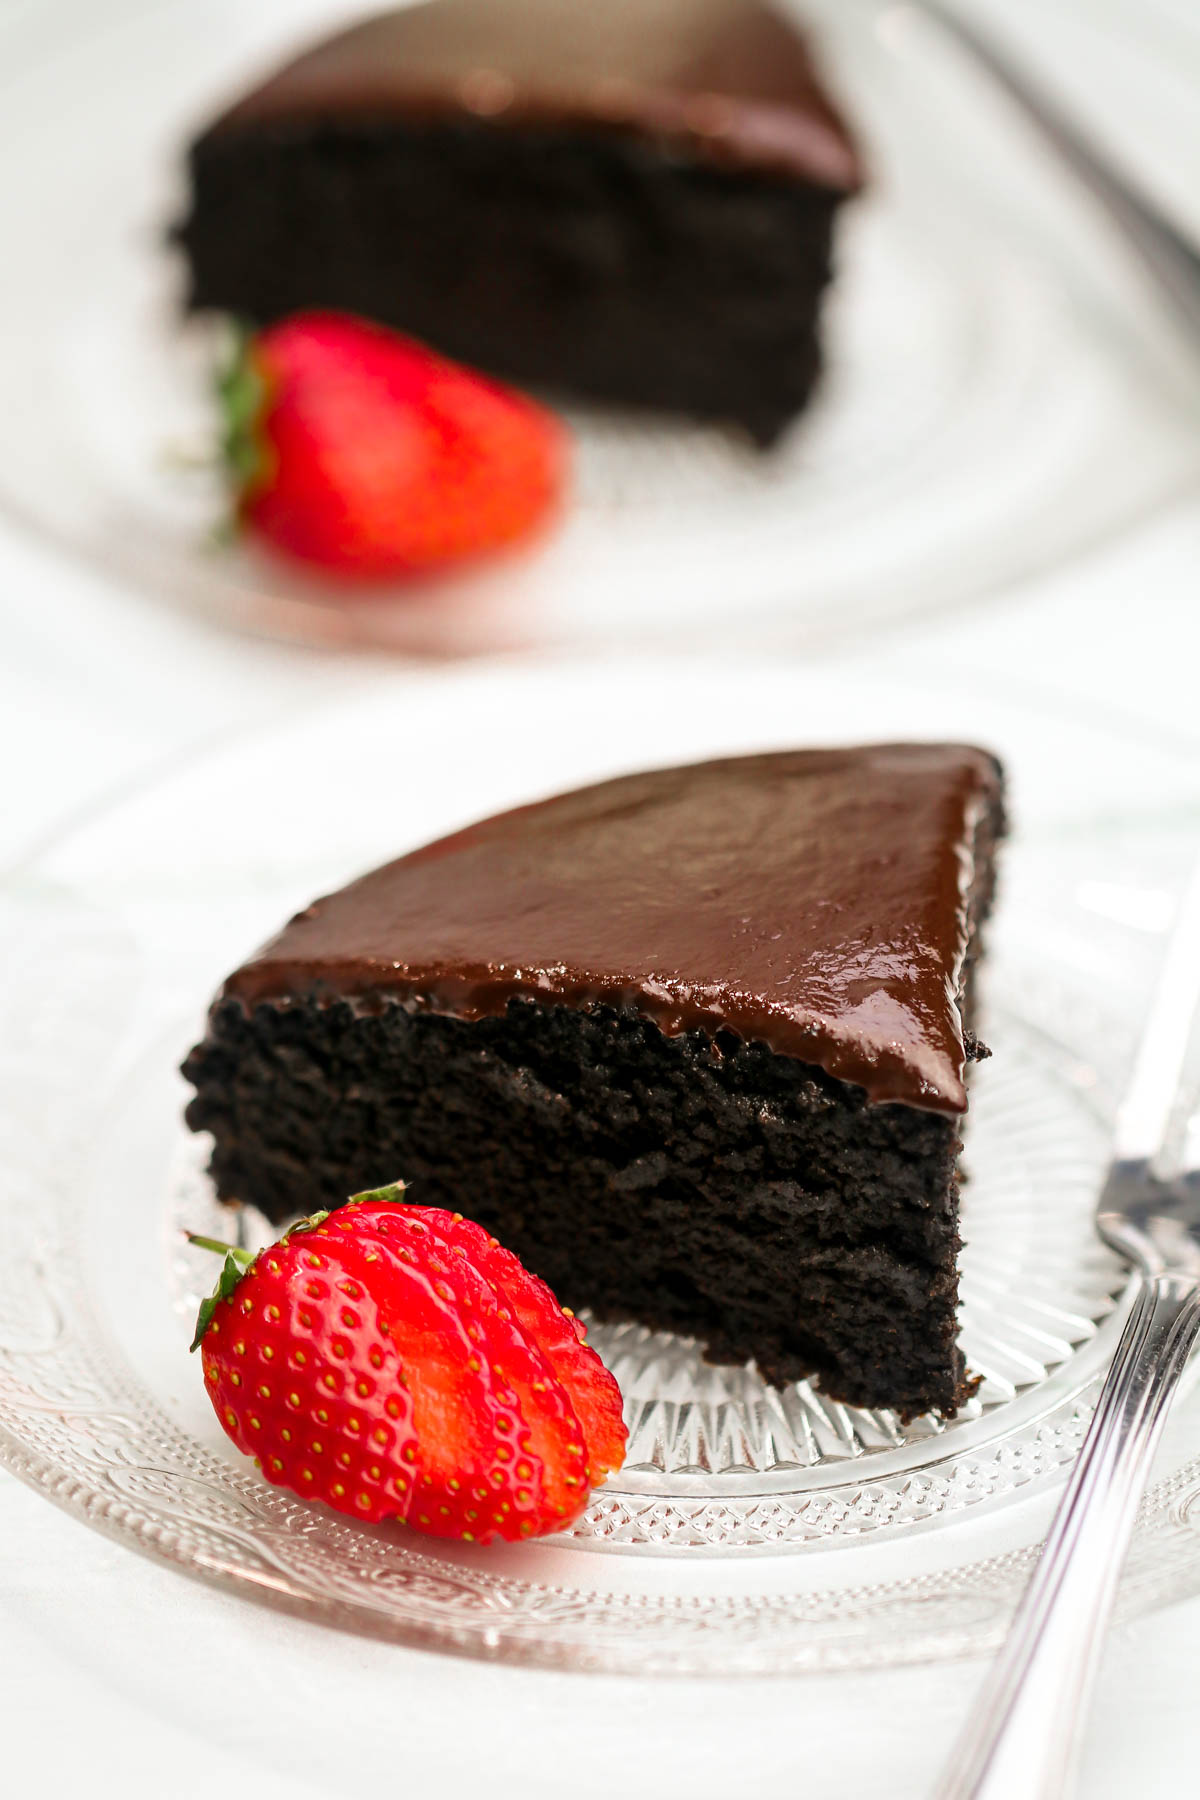 Slice of chocolate cake on a plate.